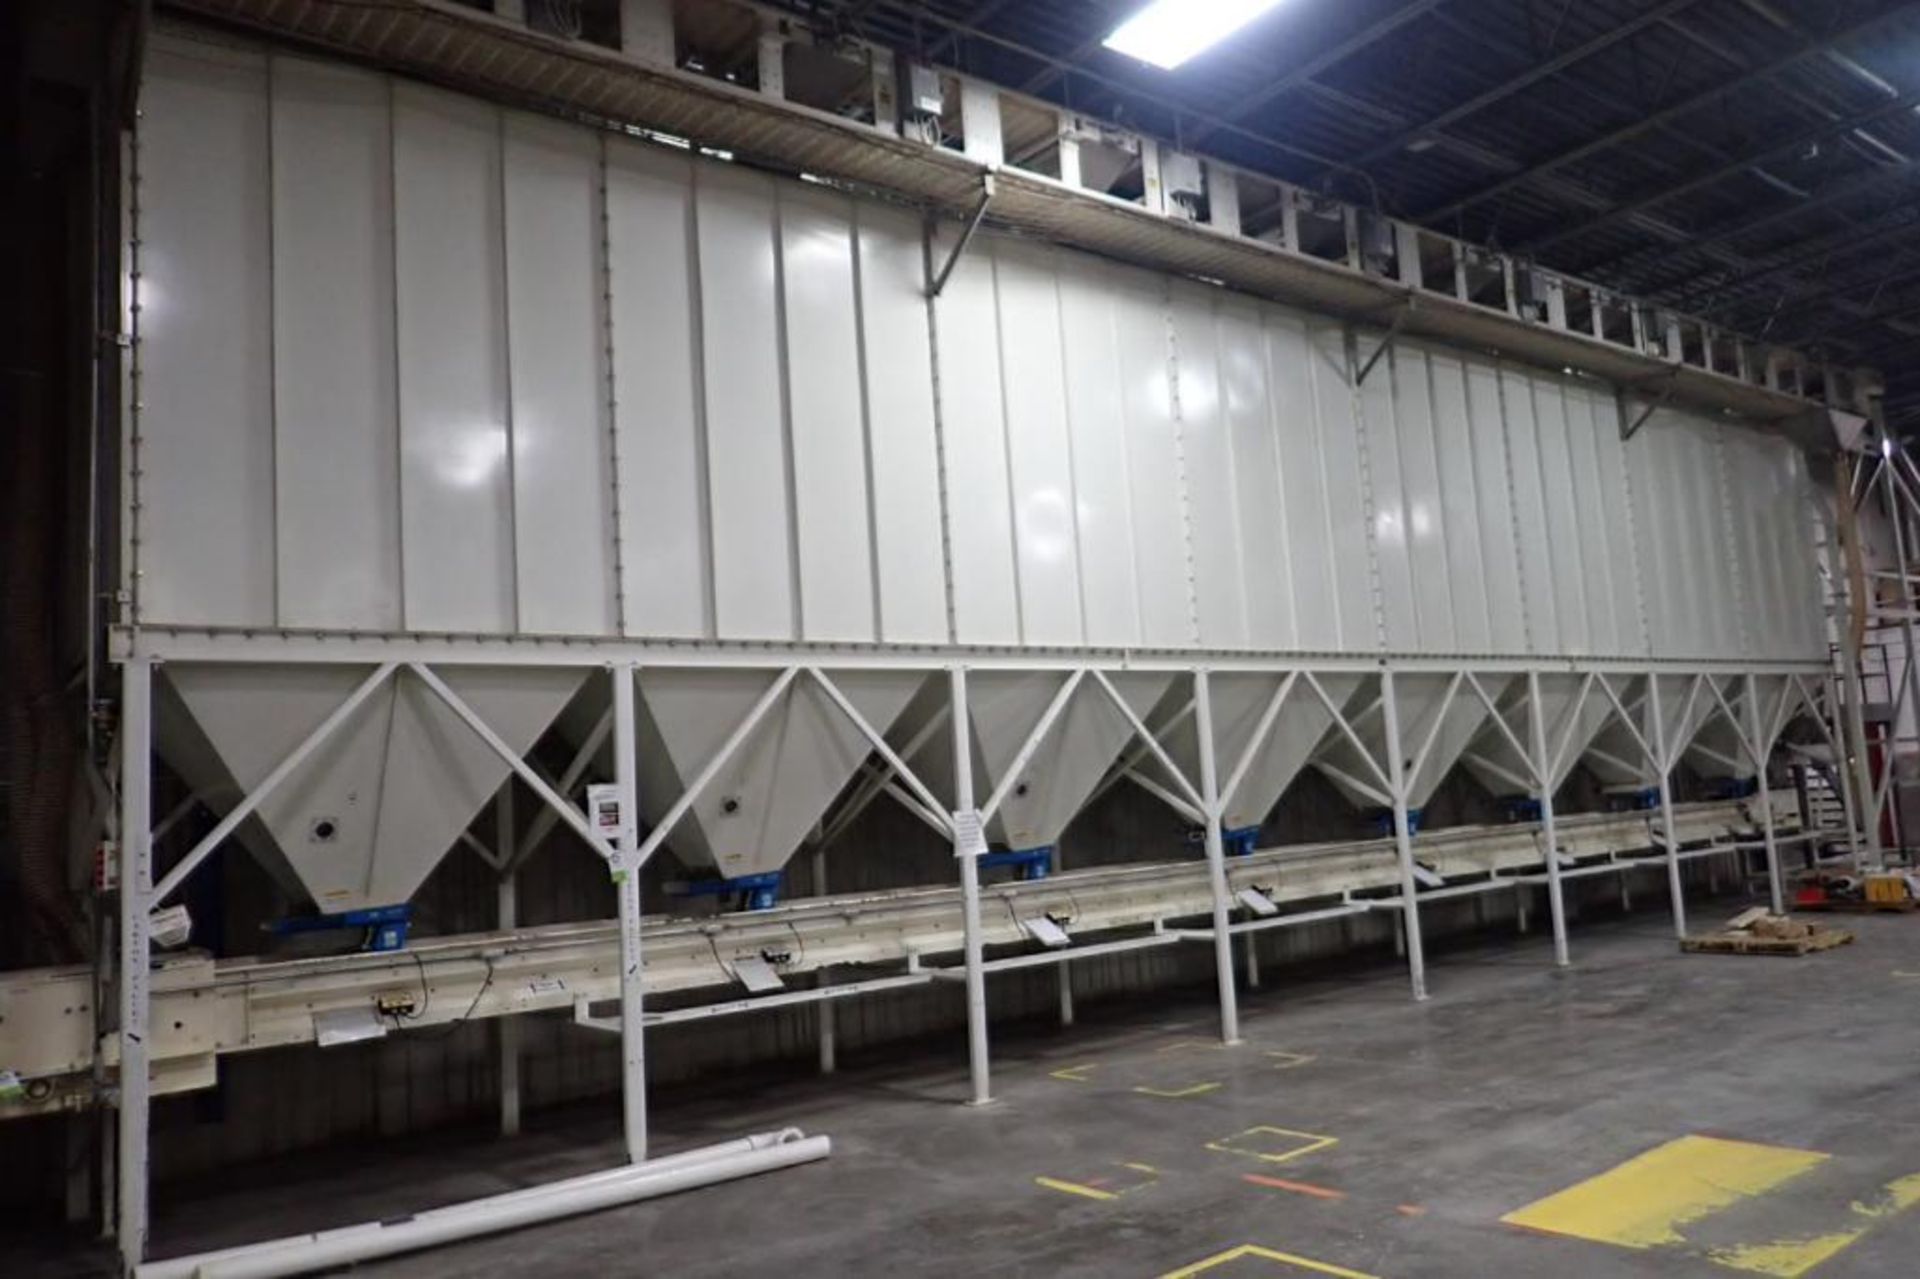 8-bin mild steel use bins, 85 in. wide x 66 in. deep x 10 ft. straight side x 5 ft. cone, overall 19